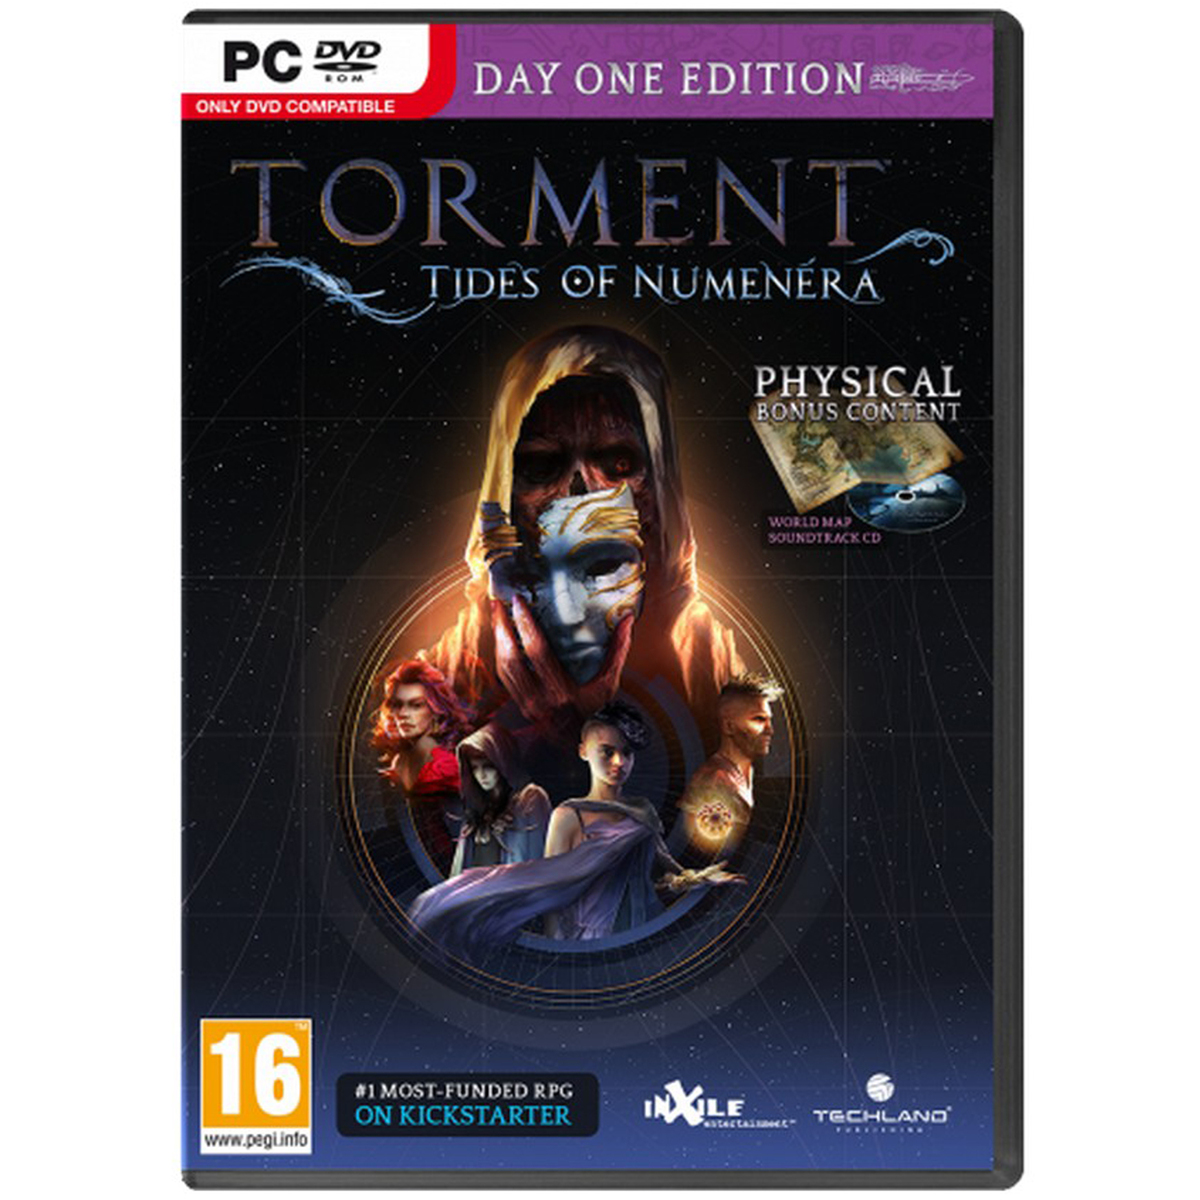 PC Torment: Tides of Numenera